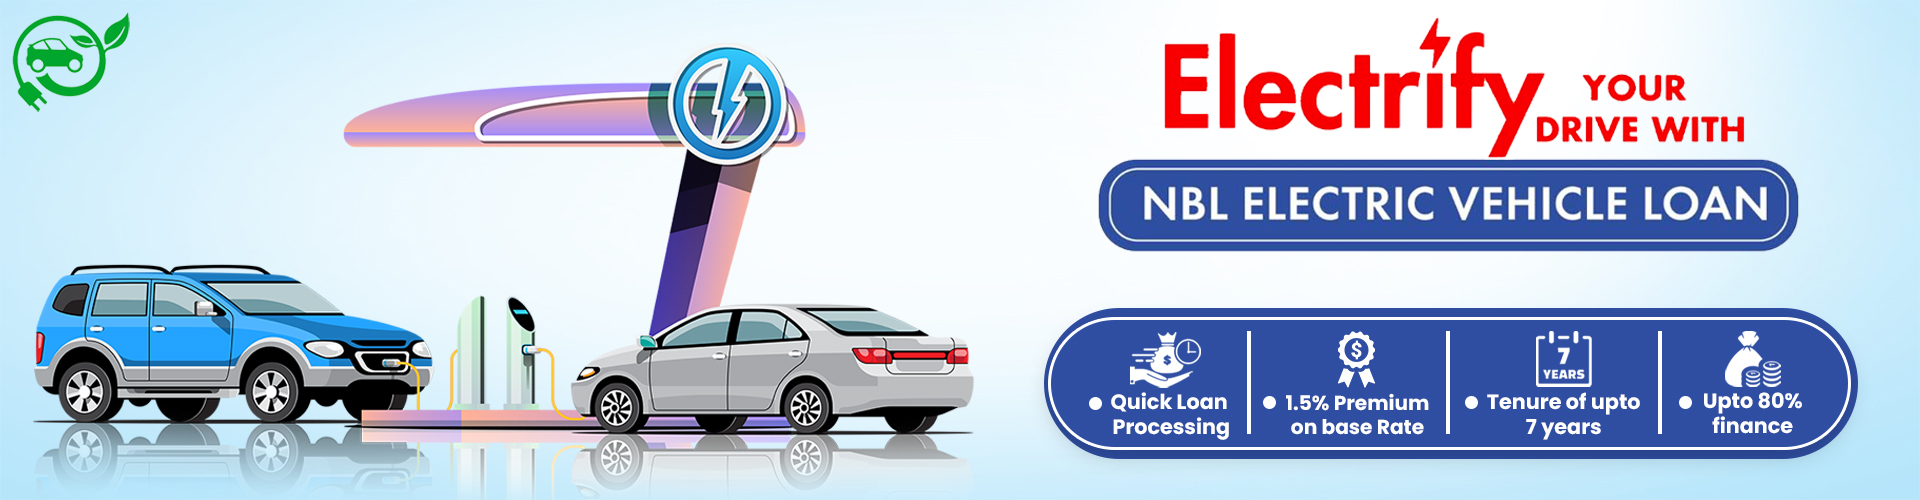 NBL Electric Vehicle Loan